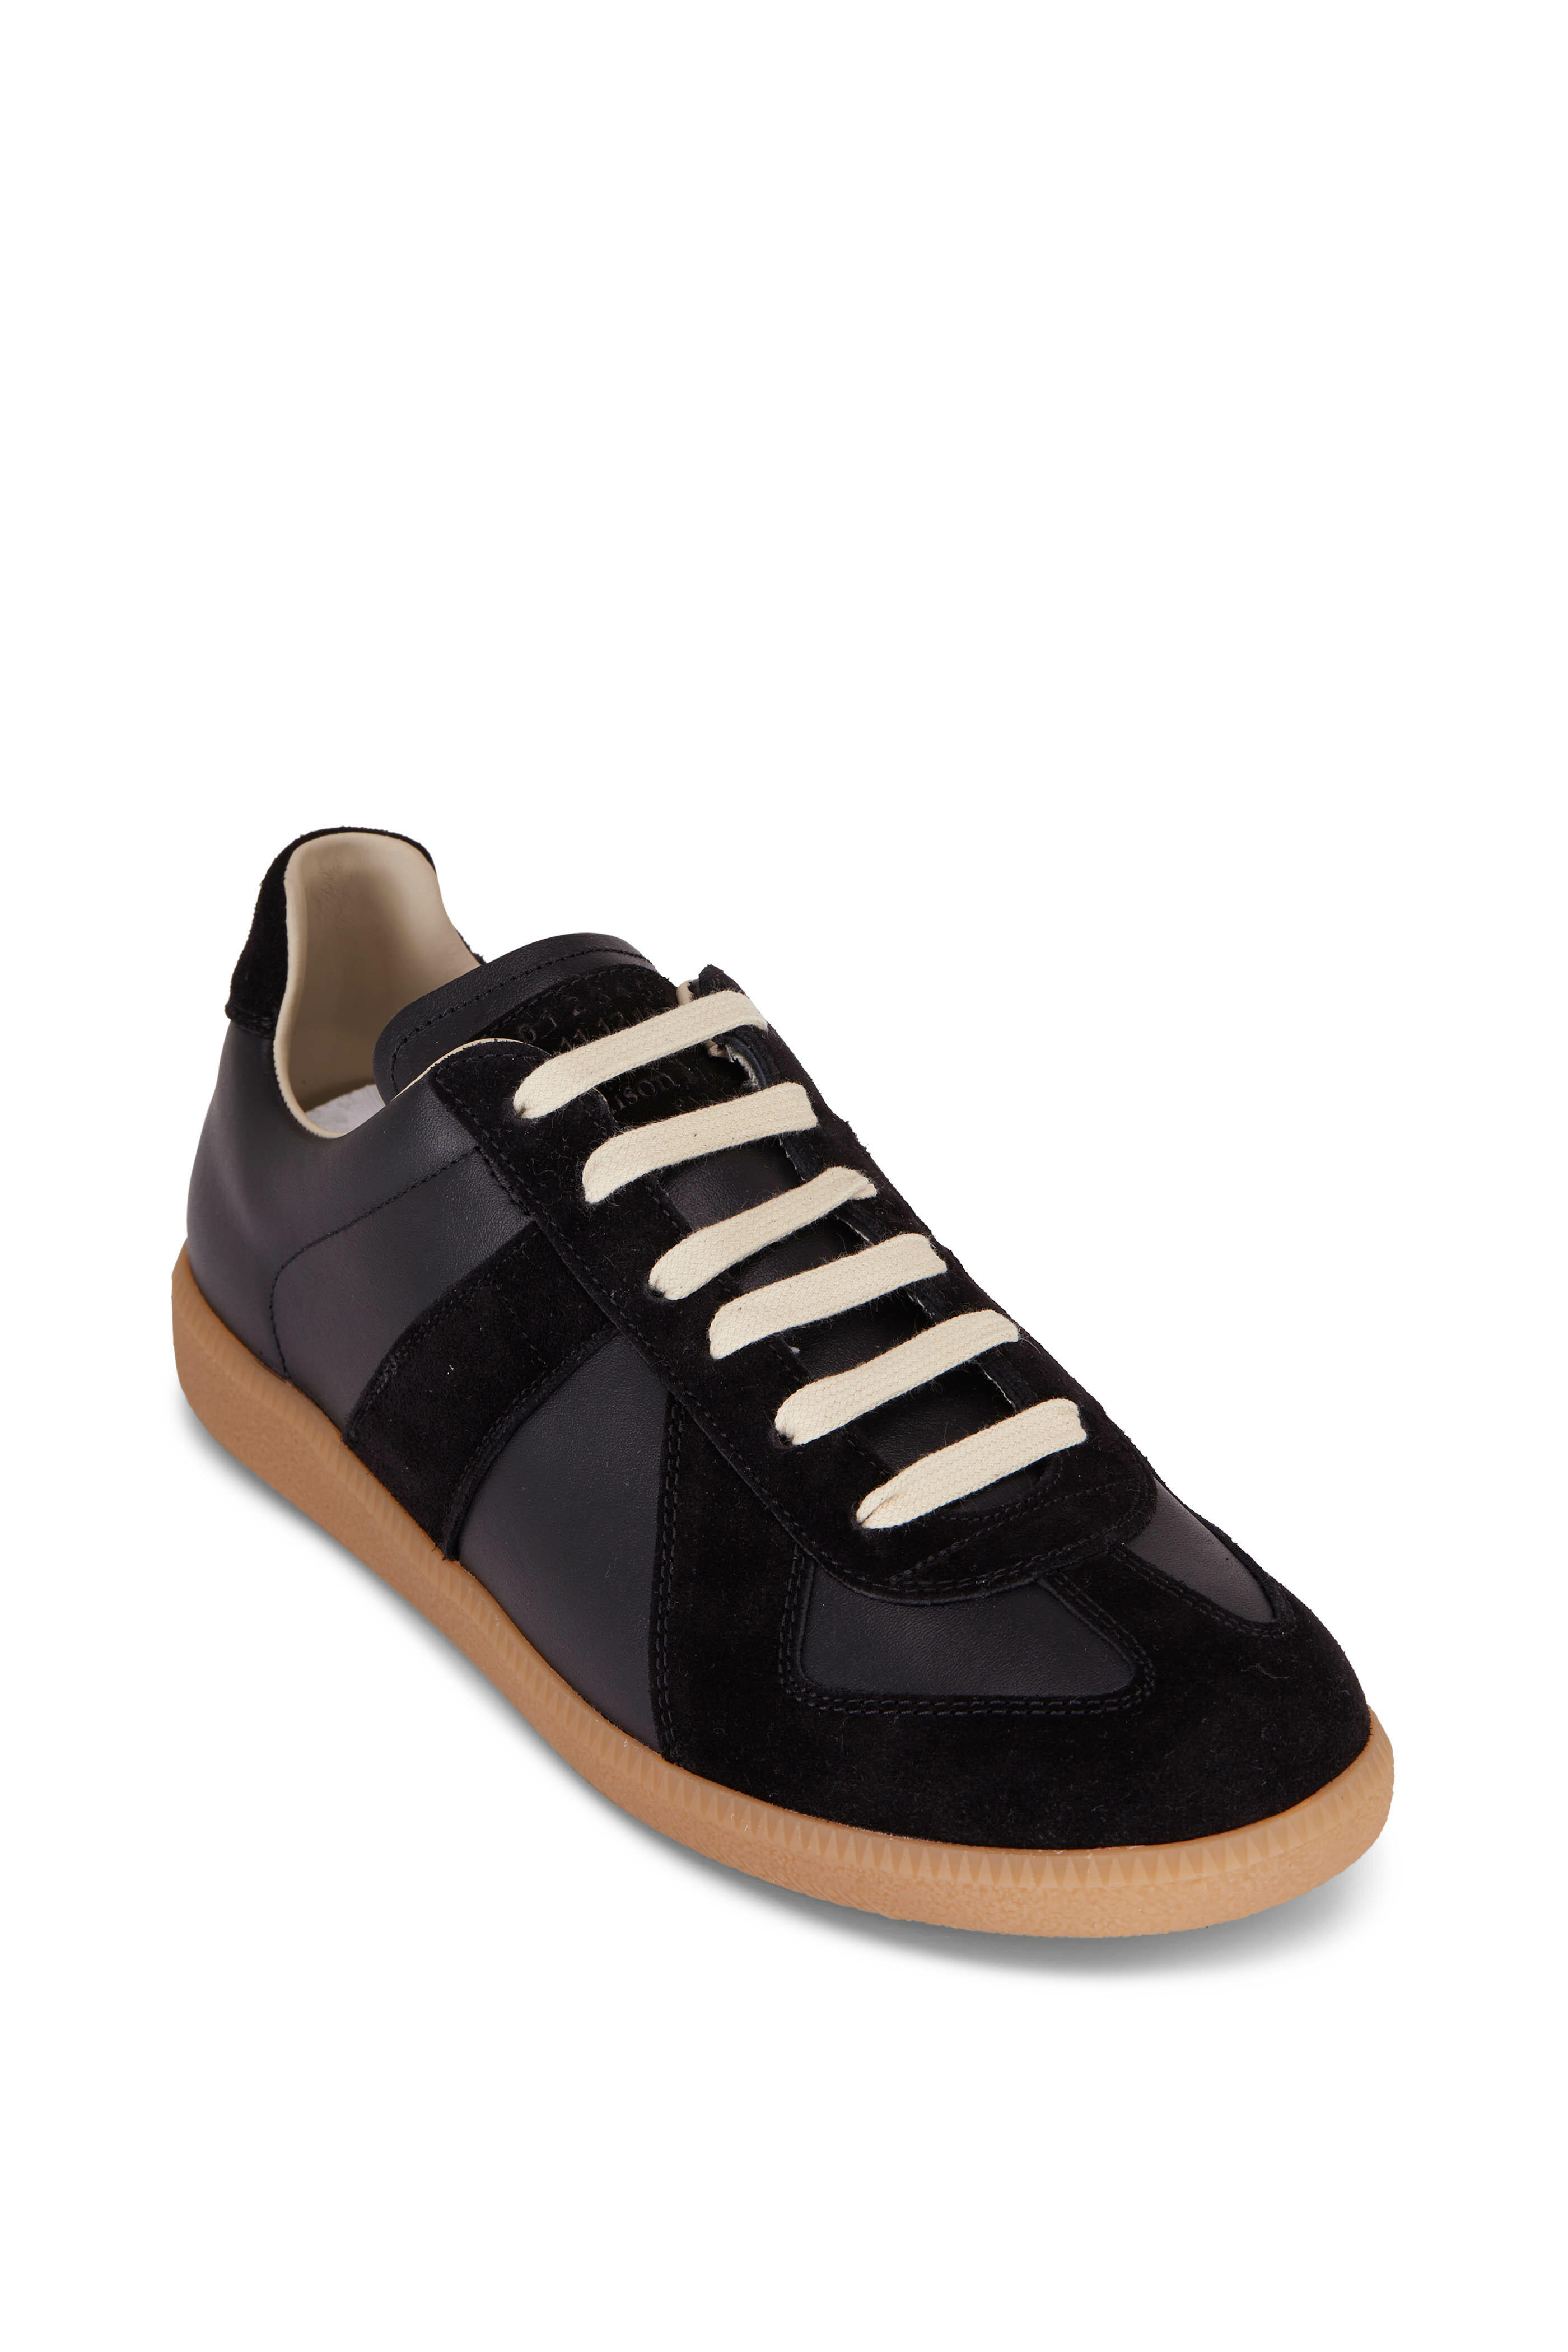 Maison Margiela - Replica Black Leather & Suede Sneaker